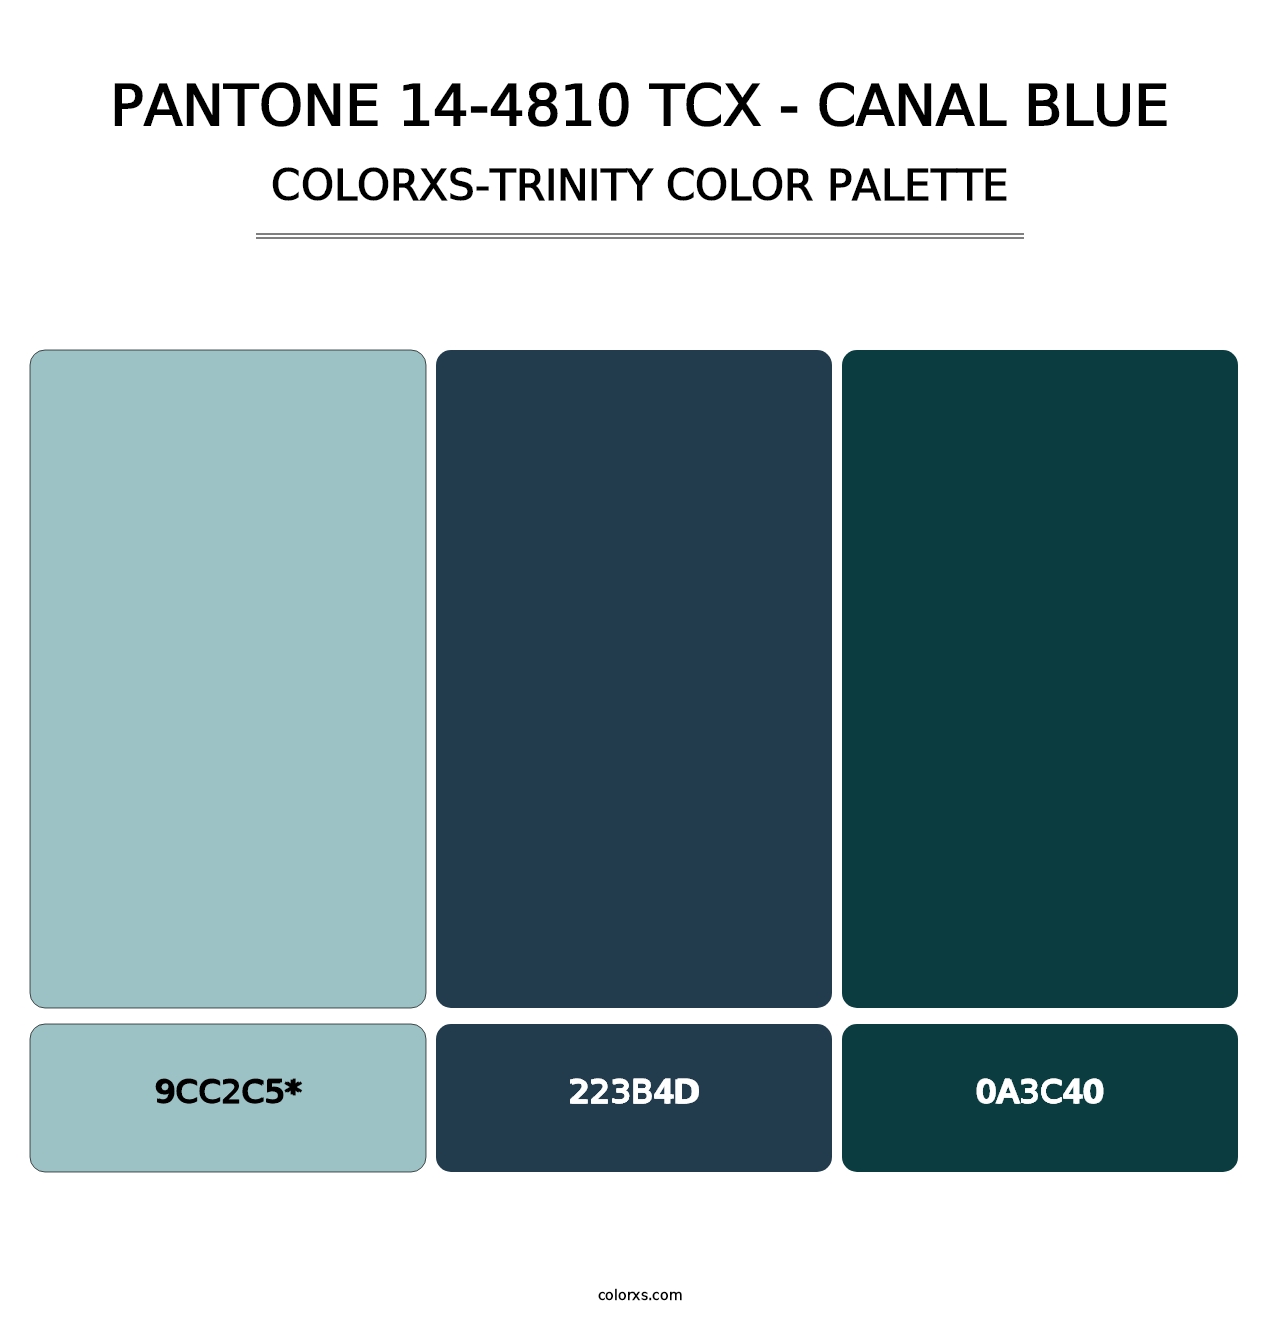 PANTONE 14-4810 TCX - Canal Blue - Colorxs Trinity Palette